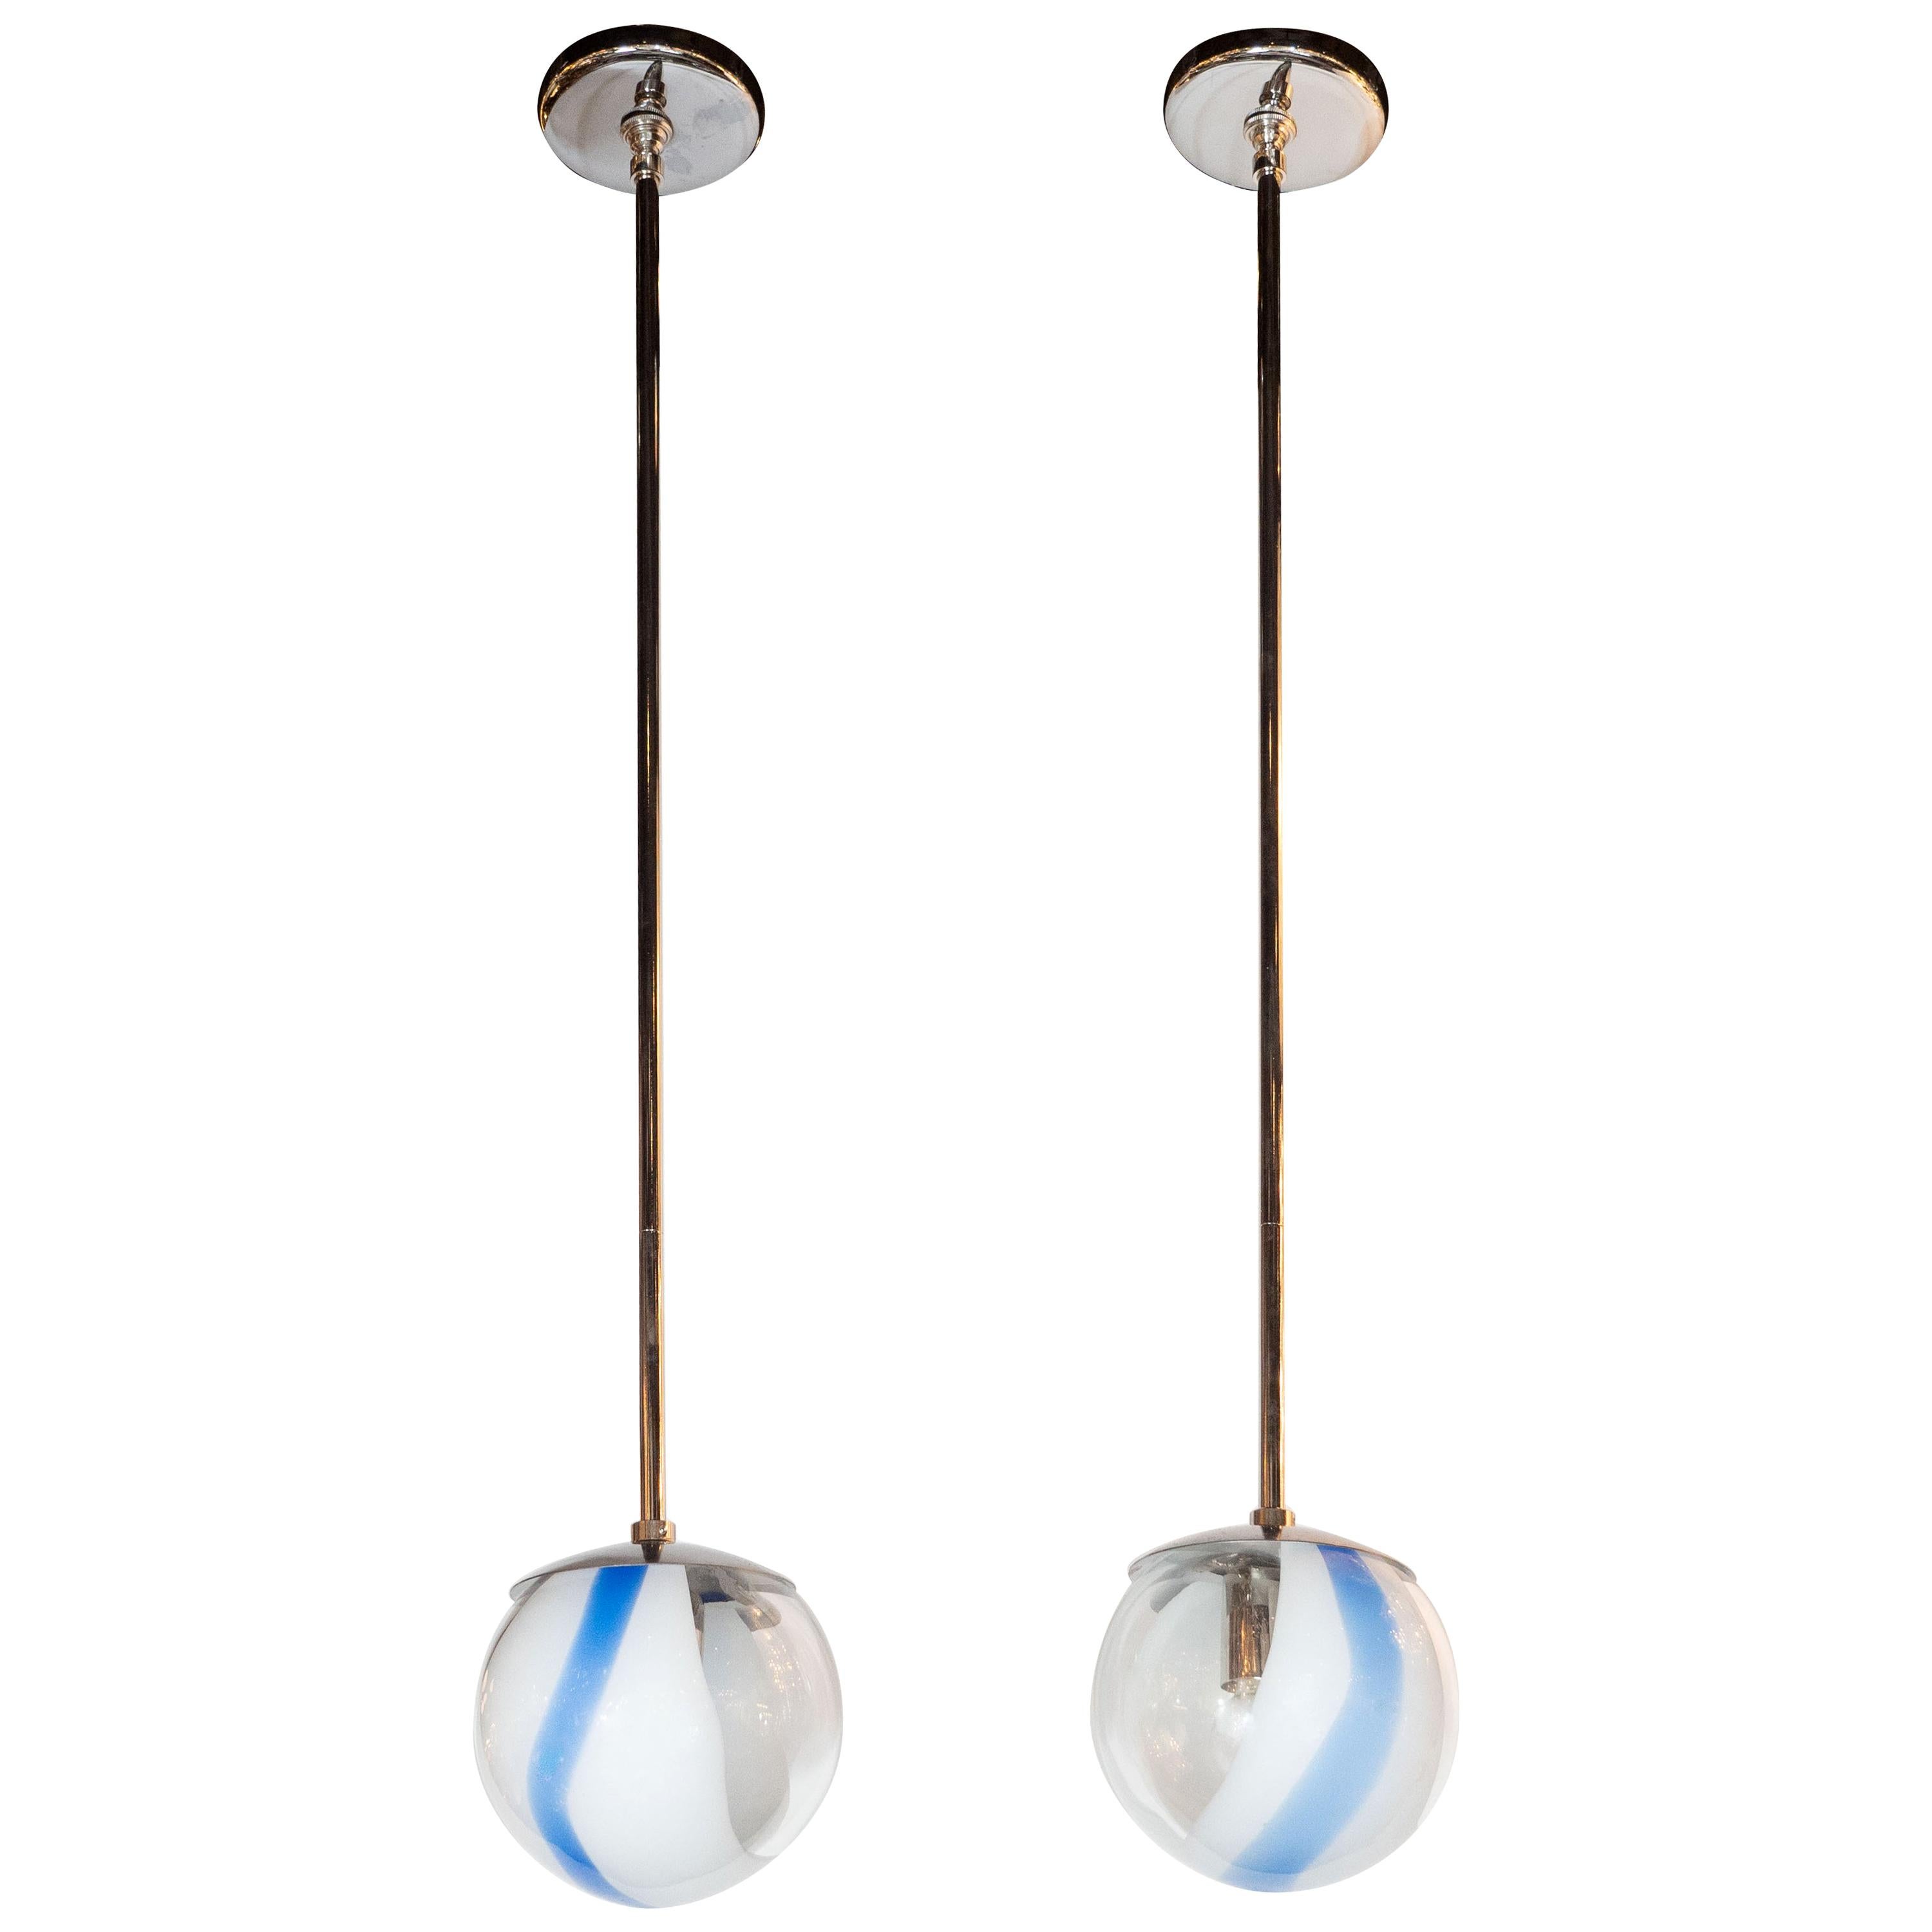 Modernist Pair of Royal Blue/White Hand Blown Murano Glass Pendants